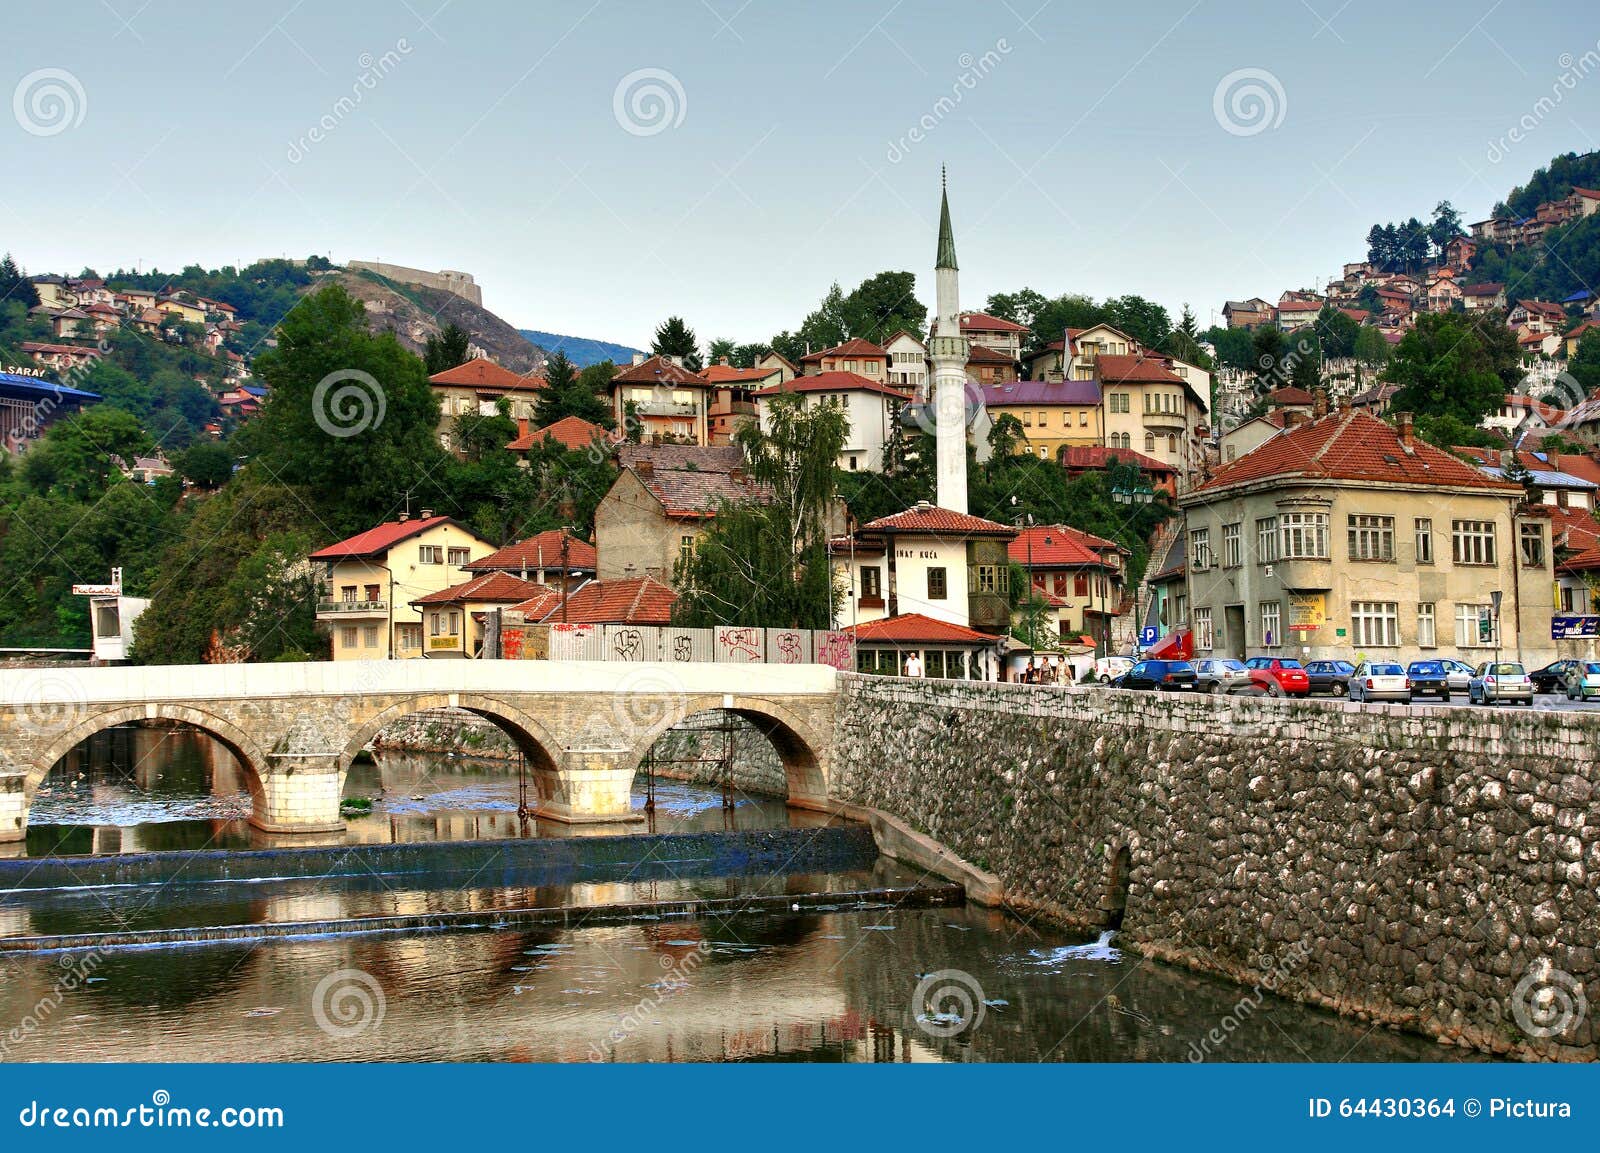 seher cehaja bridge, sarajevo, bosnia herzegovina